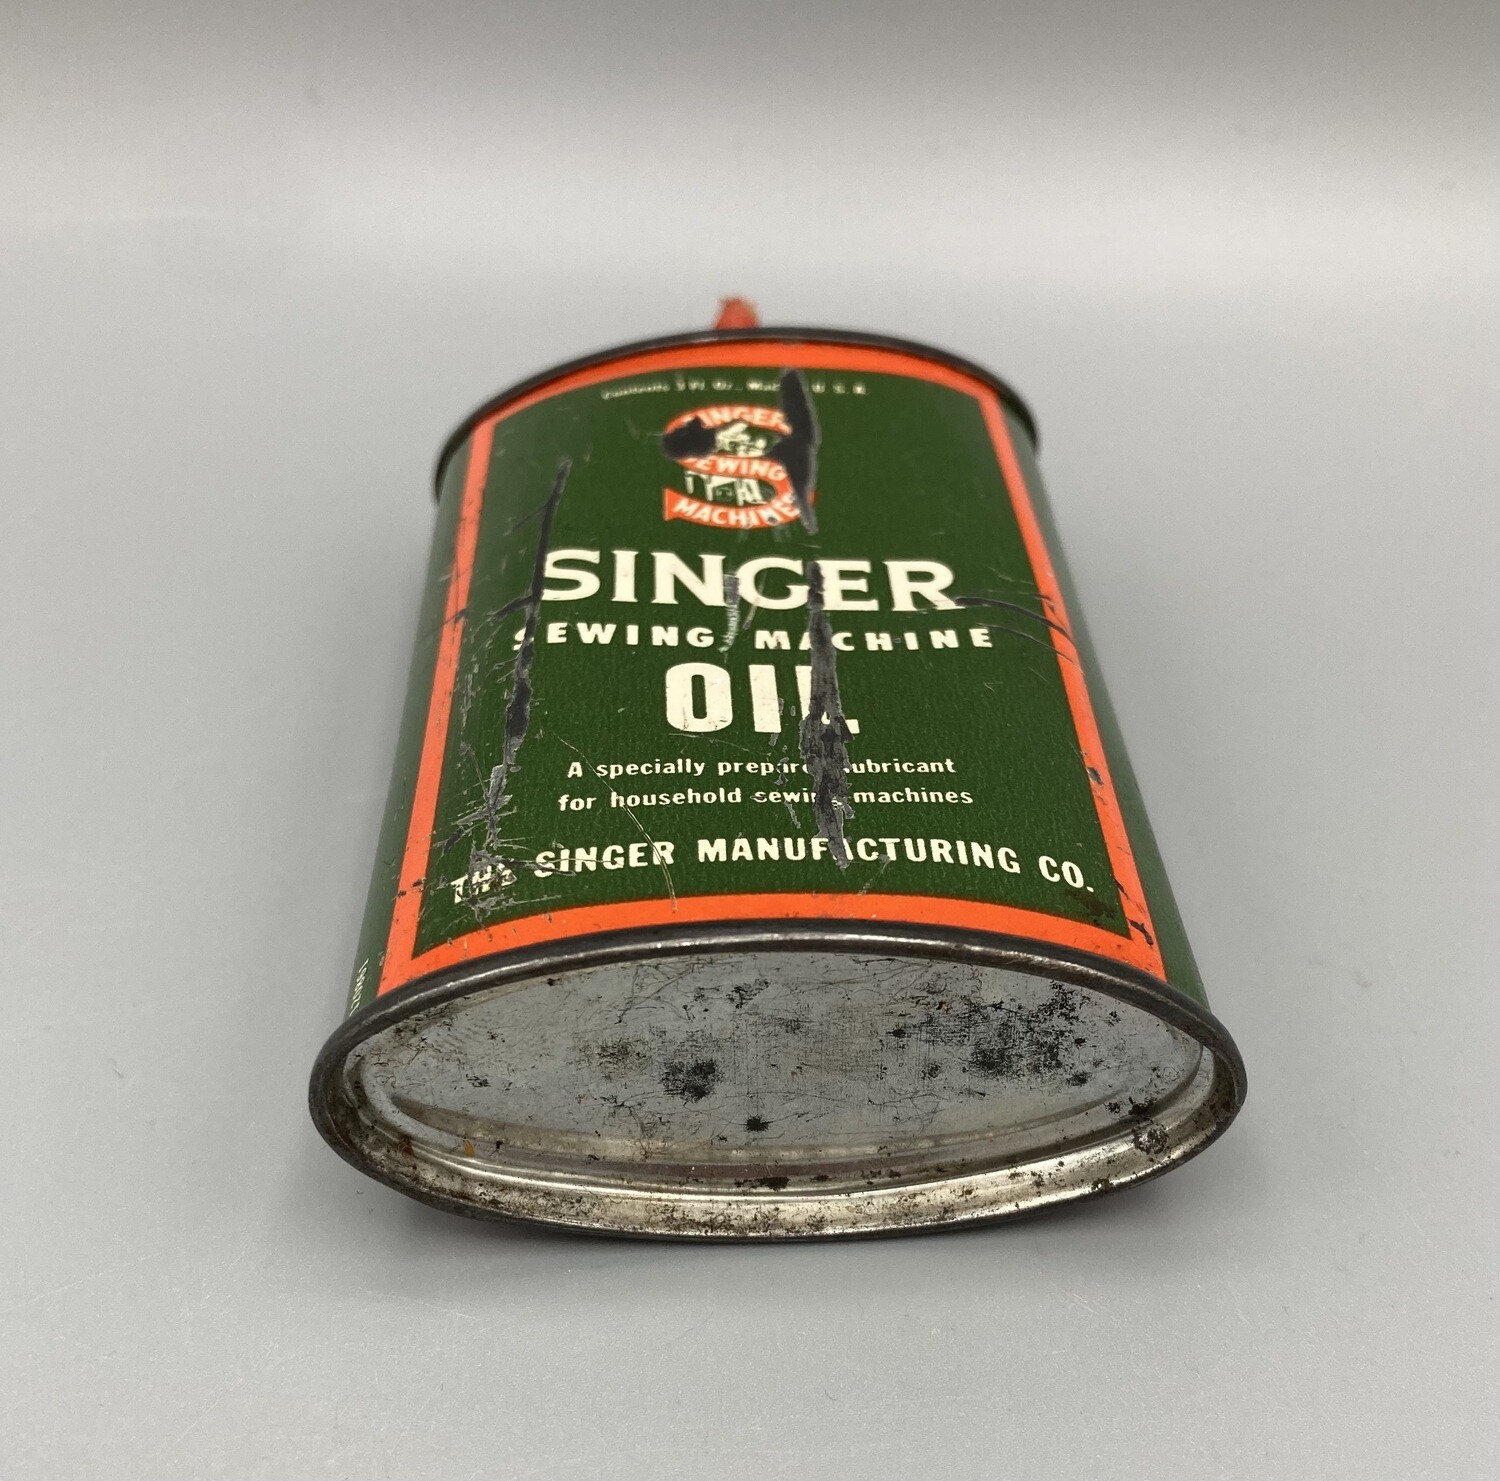 Vintage Oil Cans - Singer Sewing Machine Oil